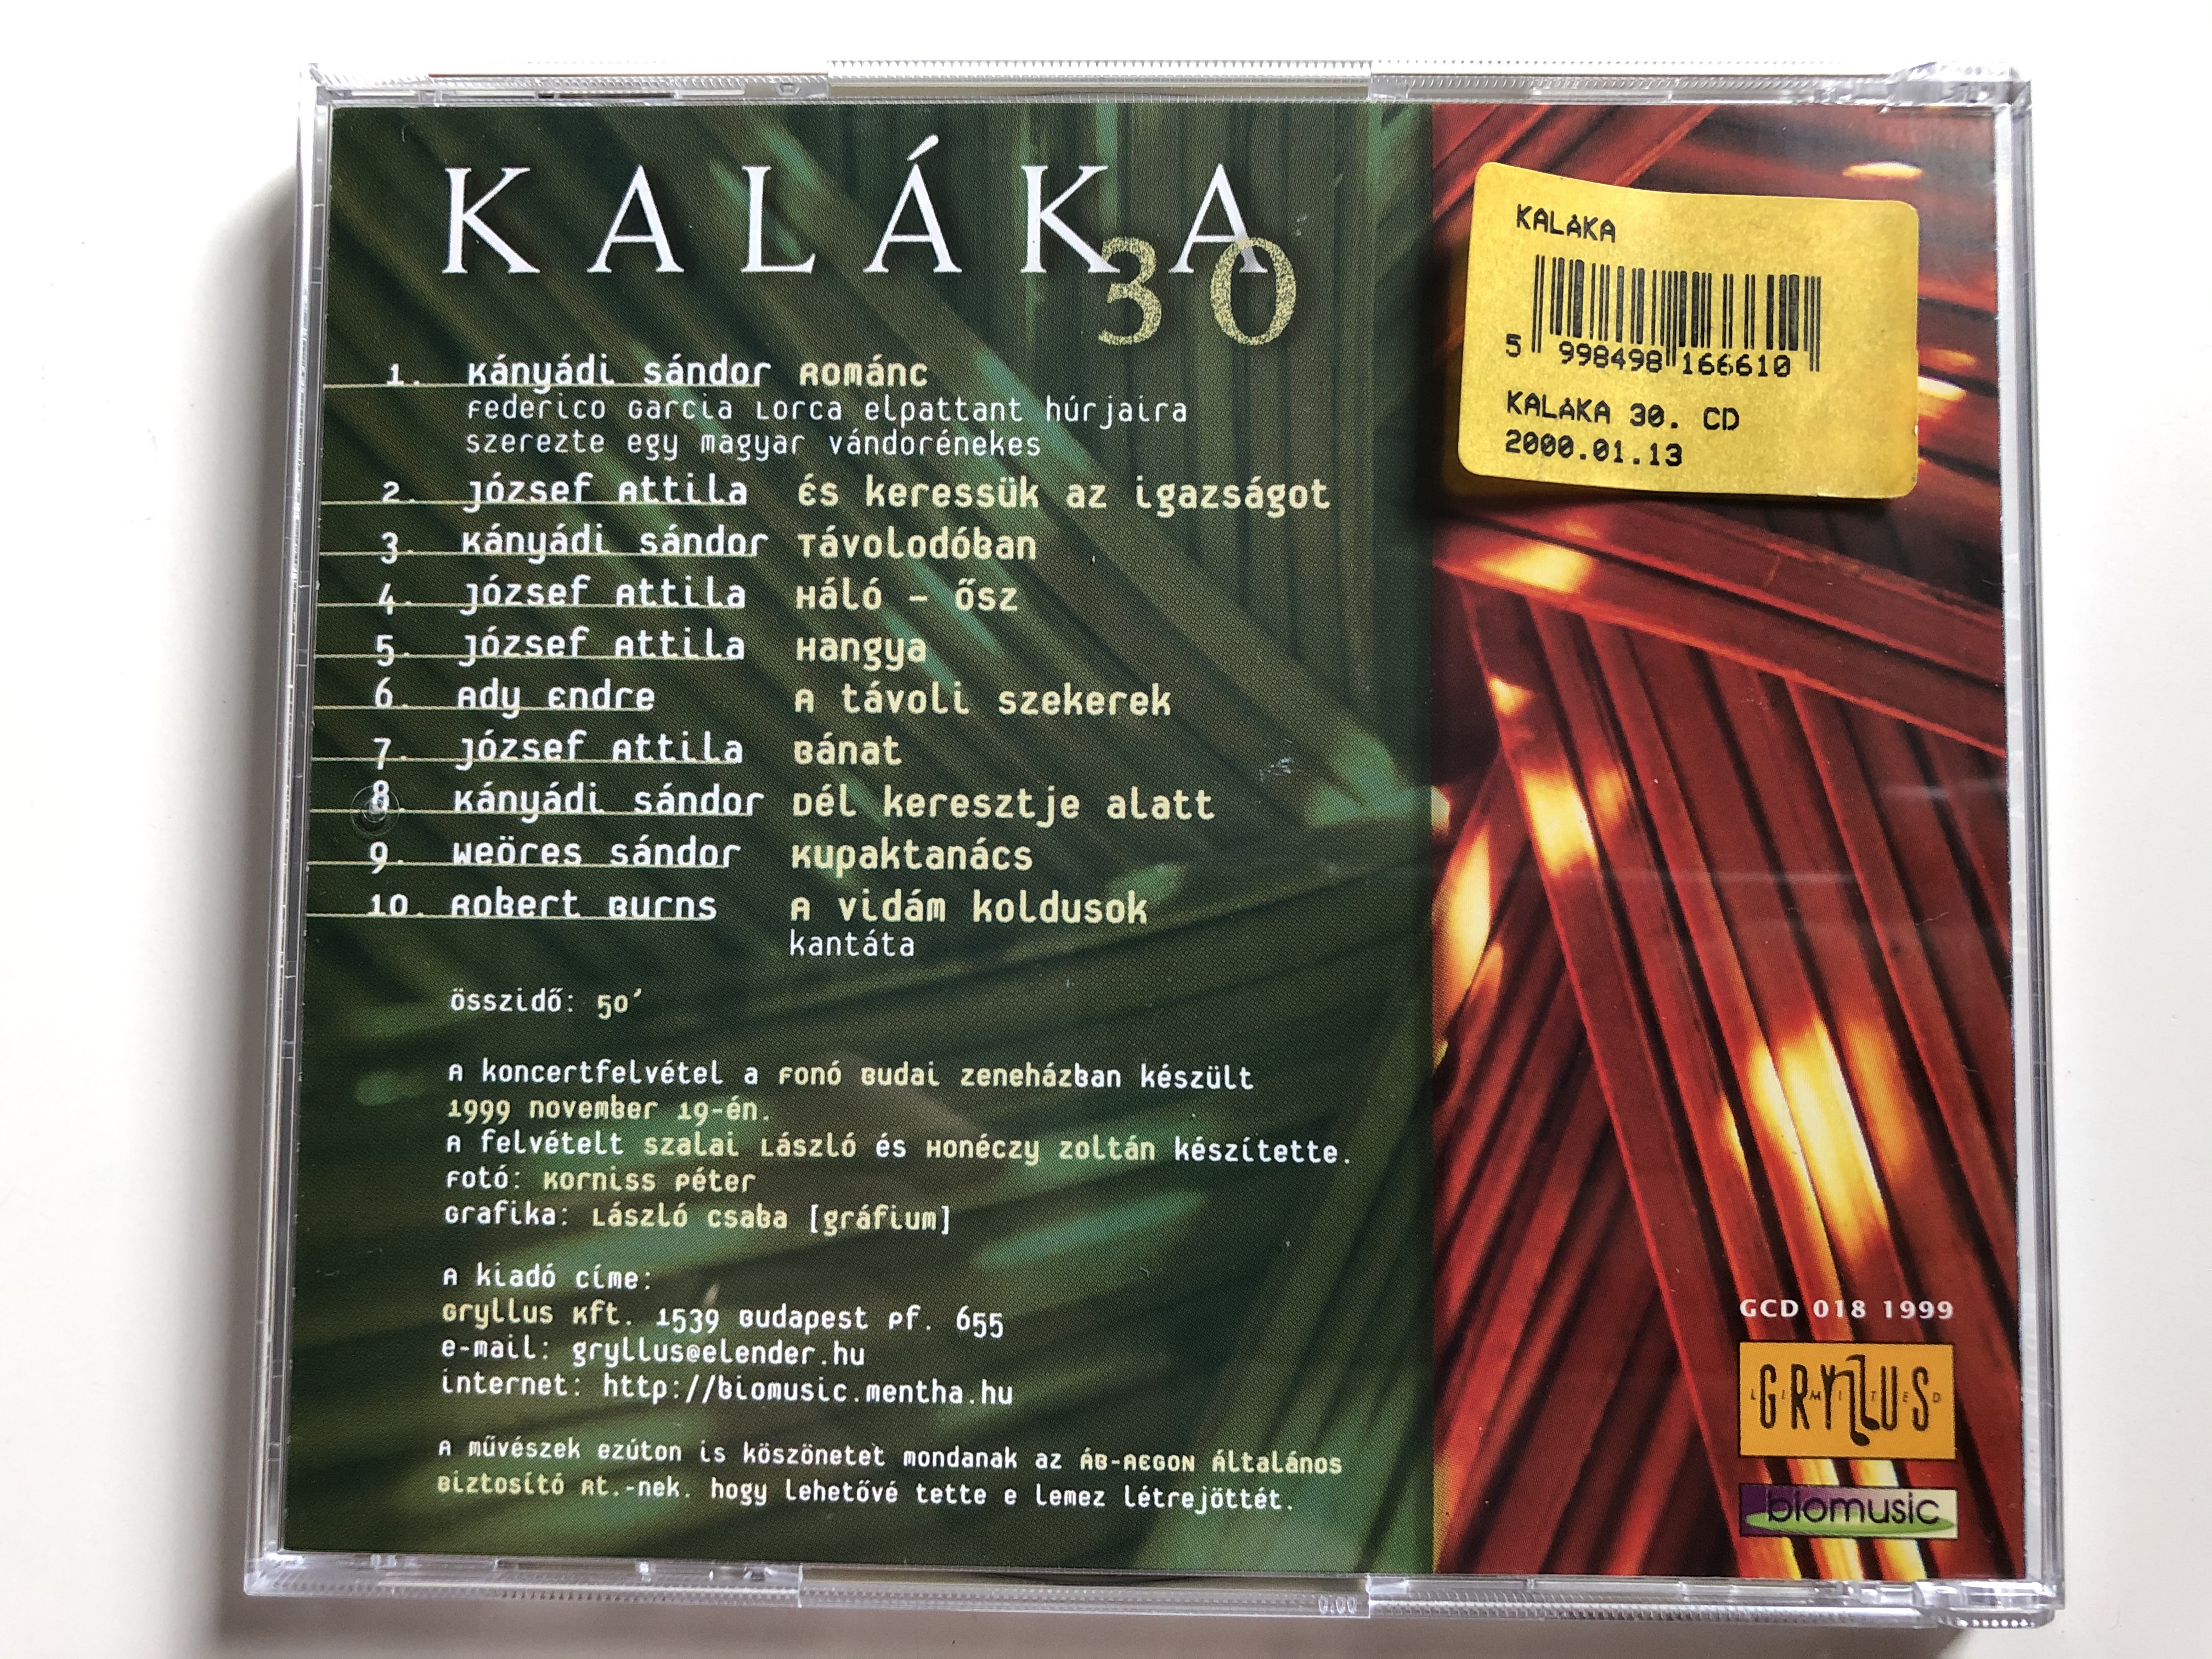 kal-ka-30-gryllus-audio-cd-1999-gcd-018-5-.jpg